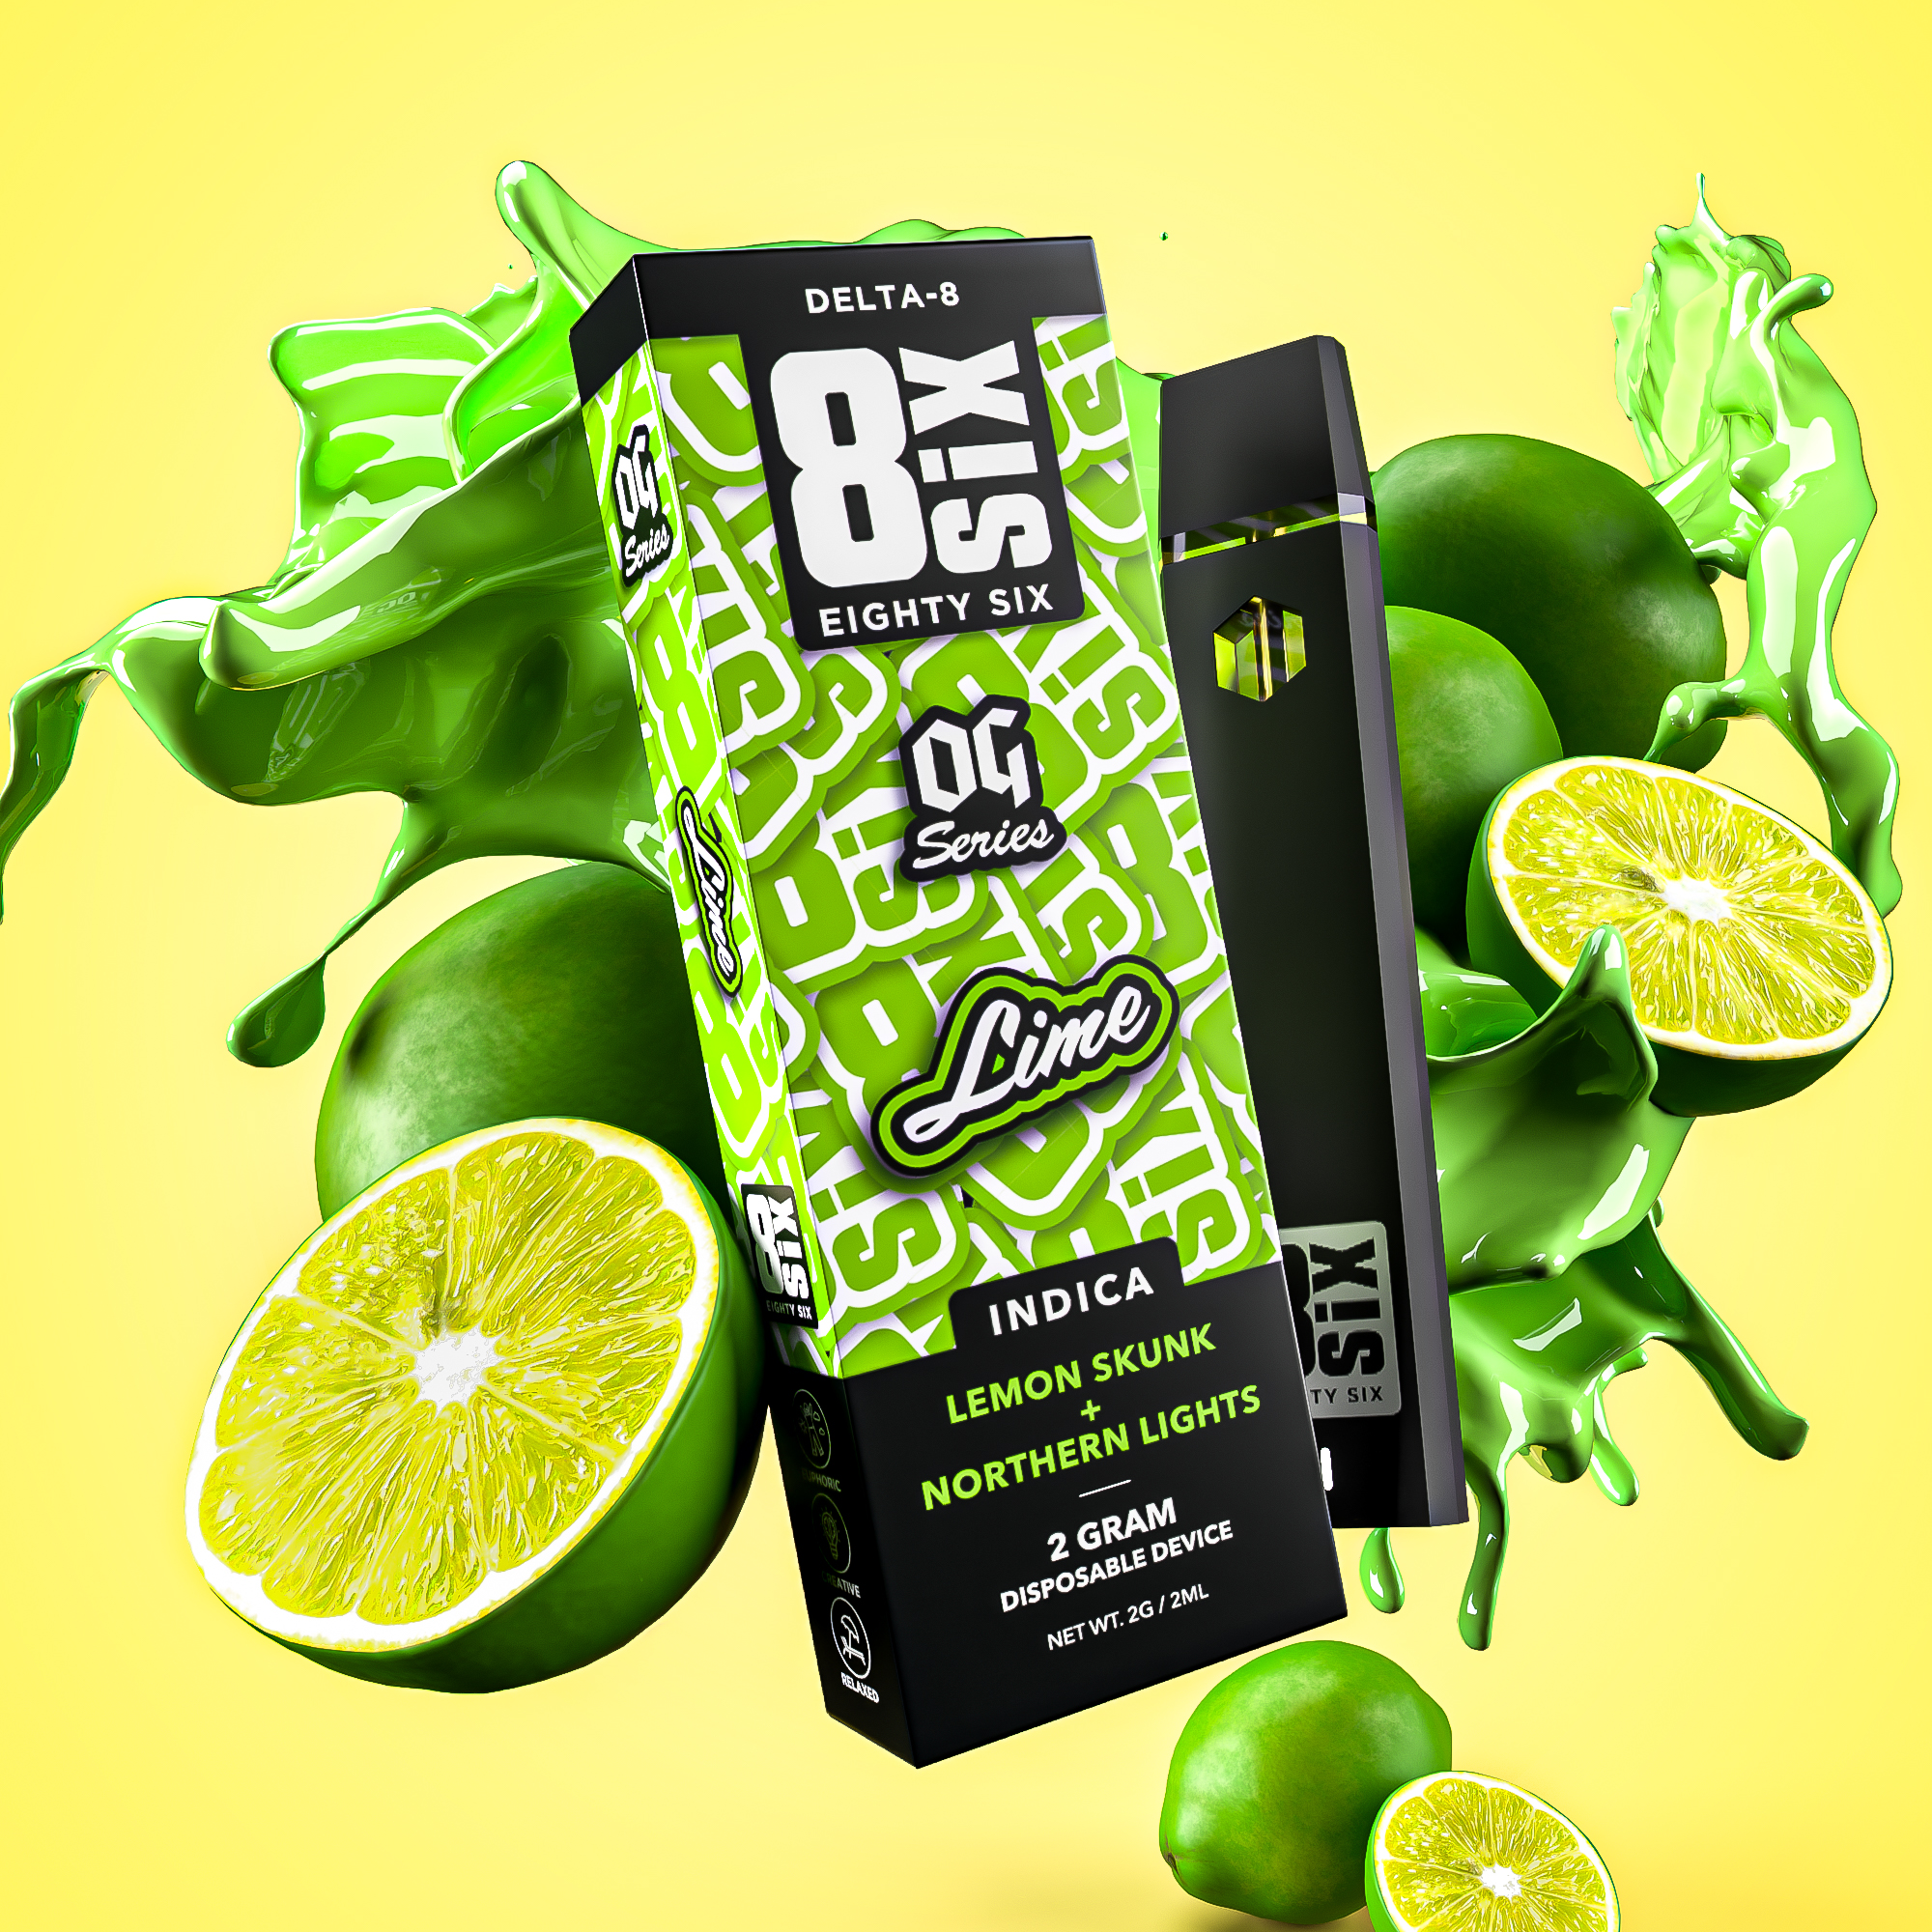 Eighty Six Lime Delta-8 THC 2G Disposable (Lemon Skunk) Best Price